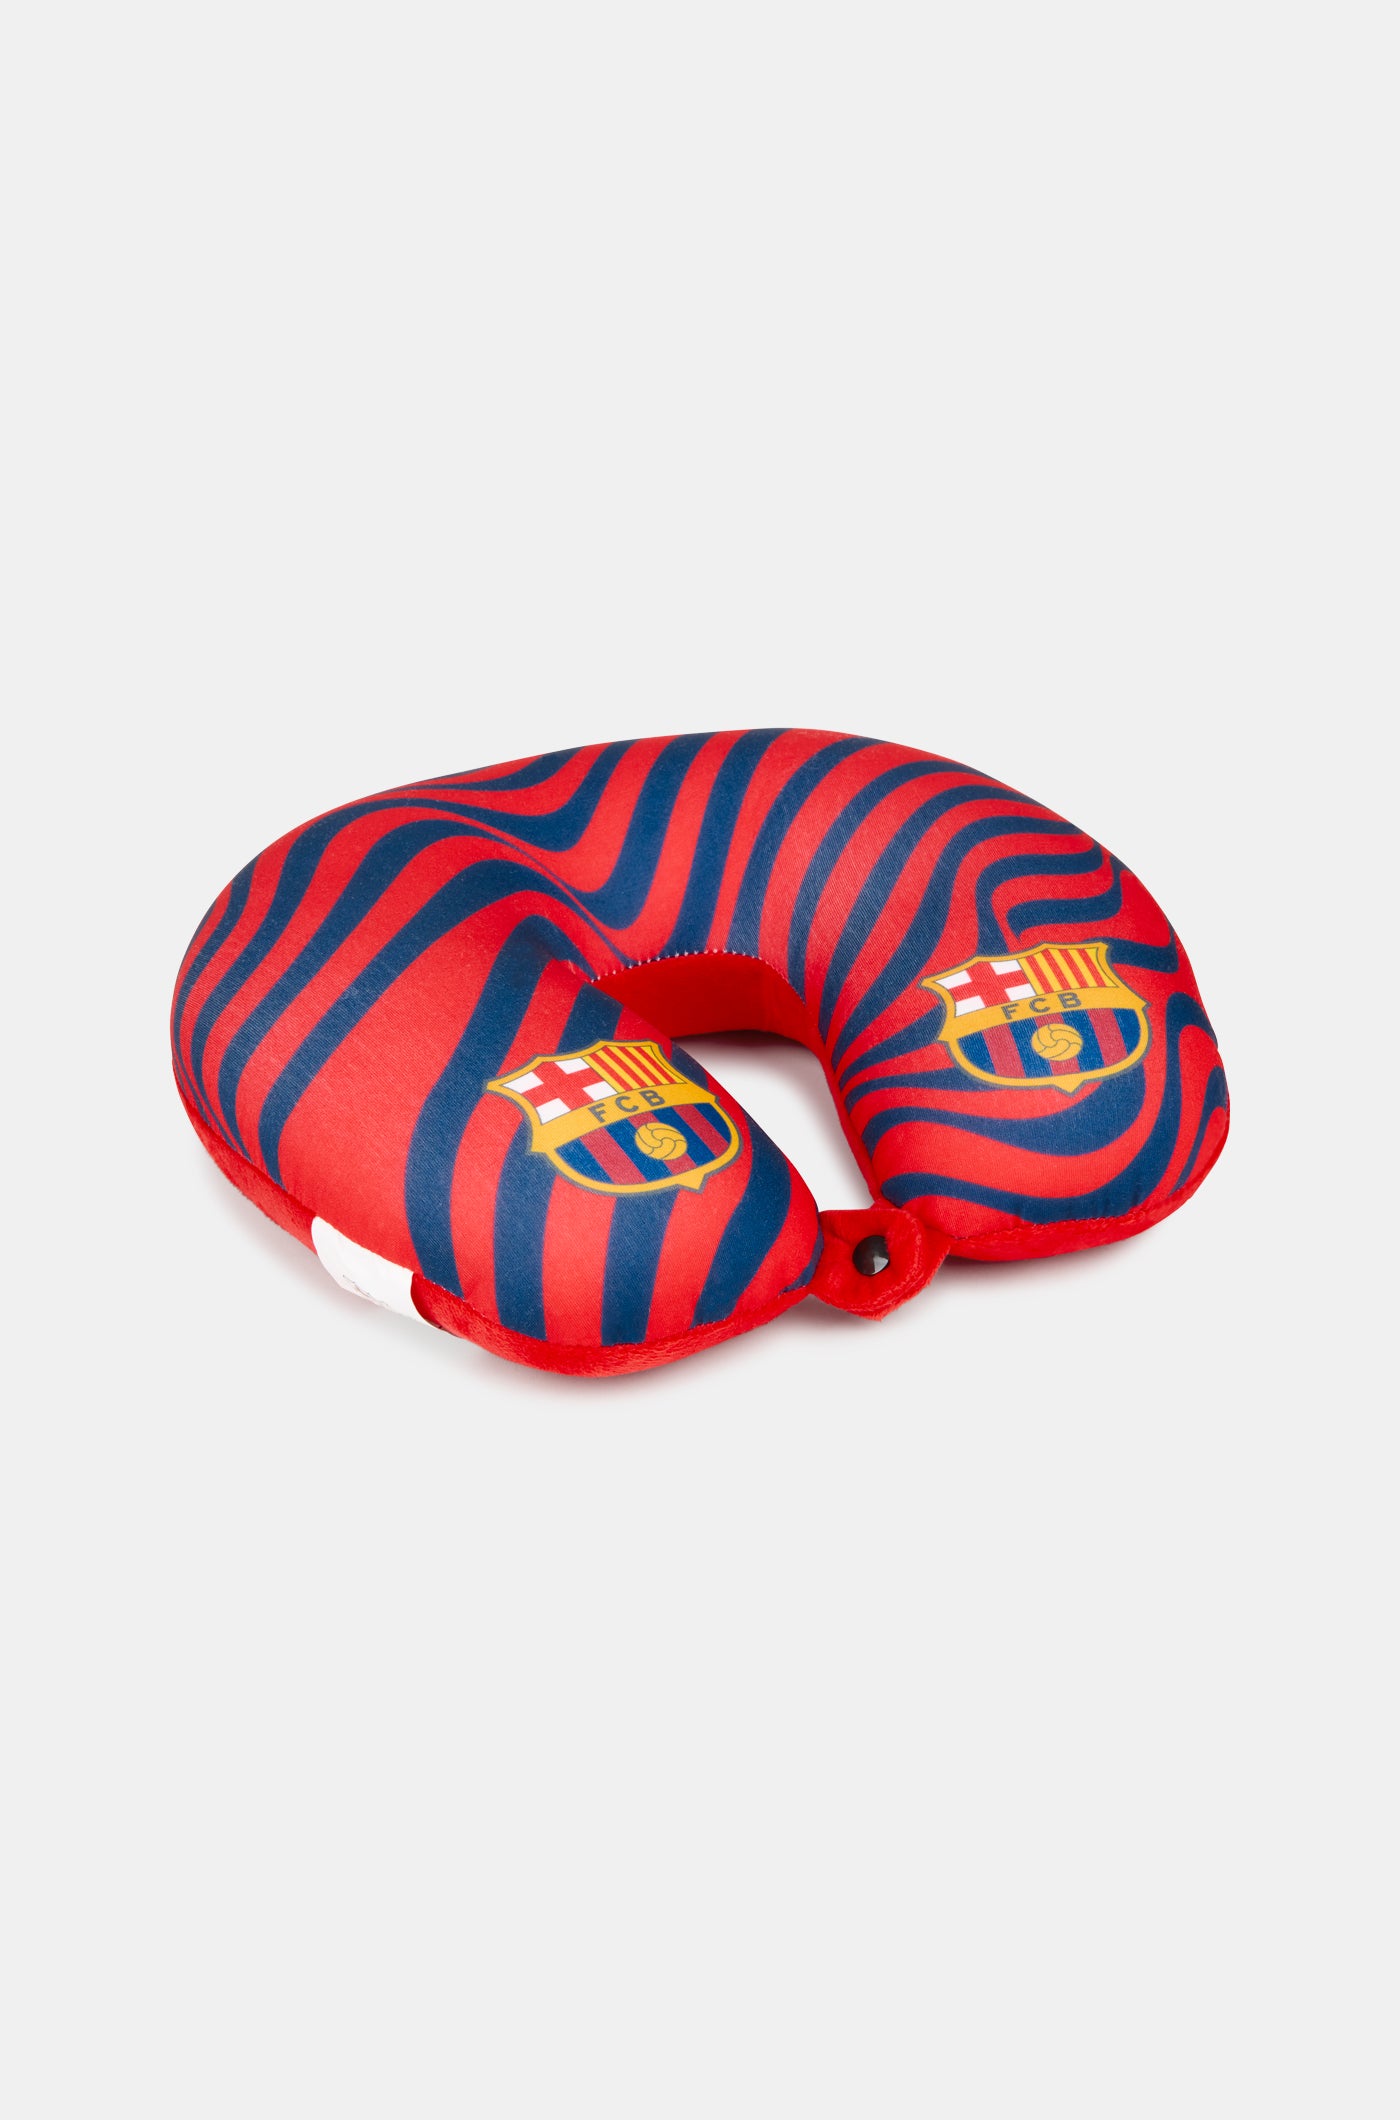 Coixí cervical "Swirl" del FC Barcelona